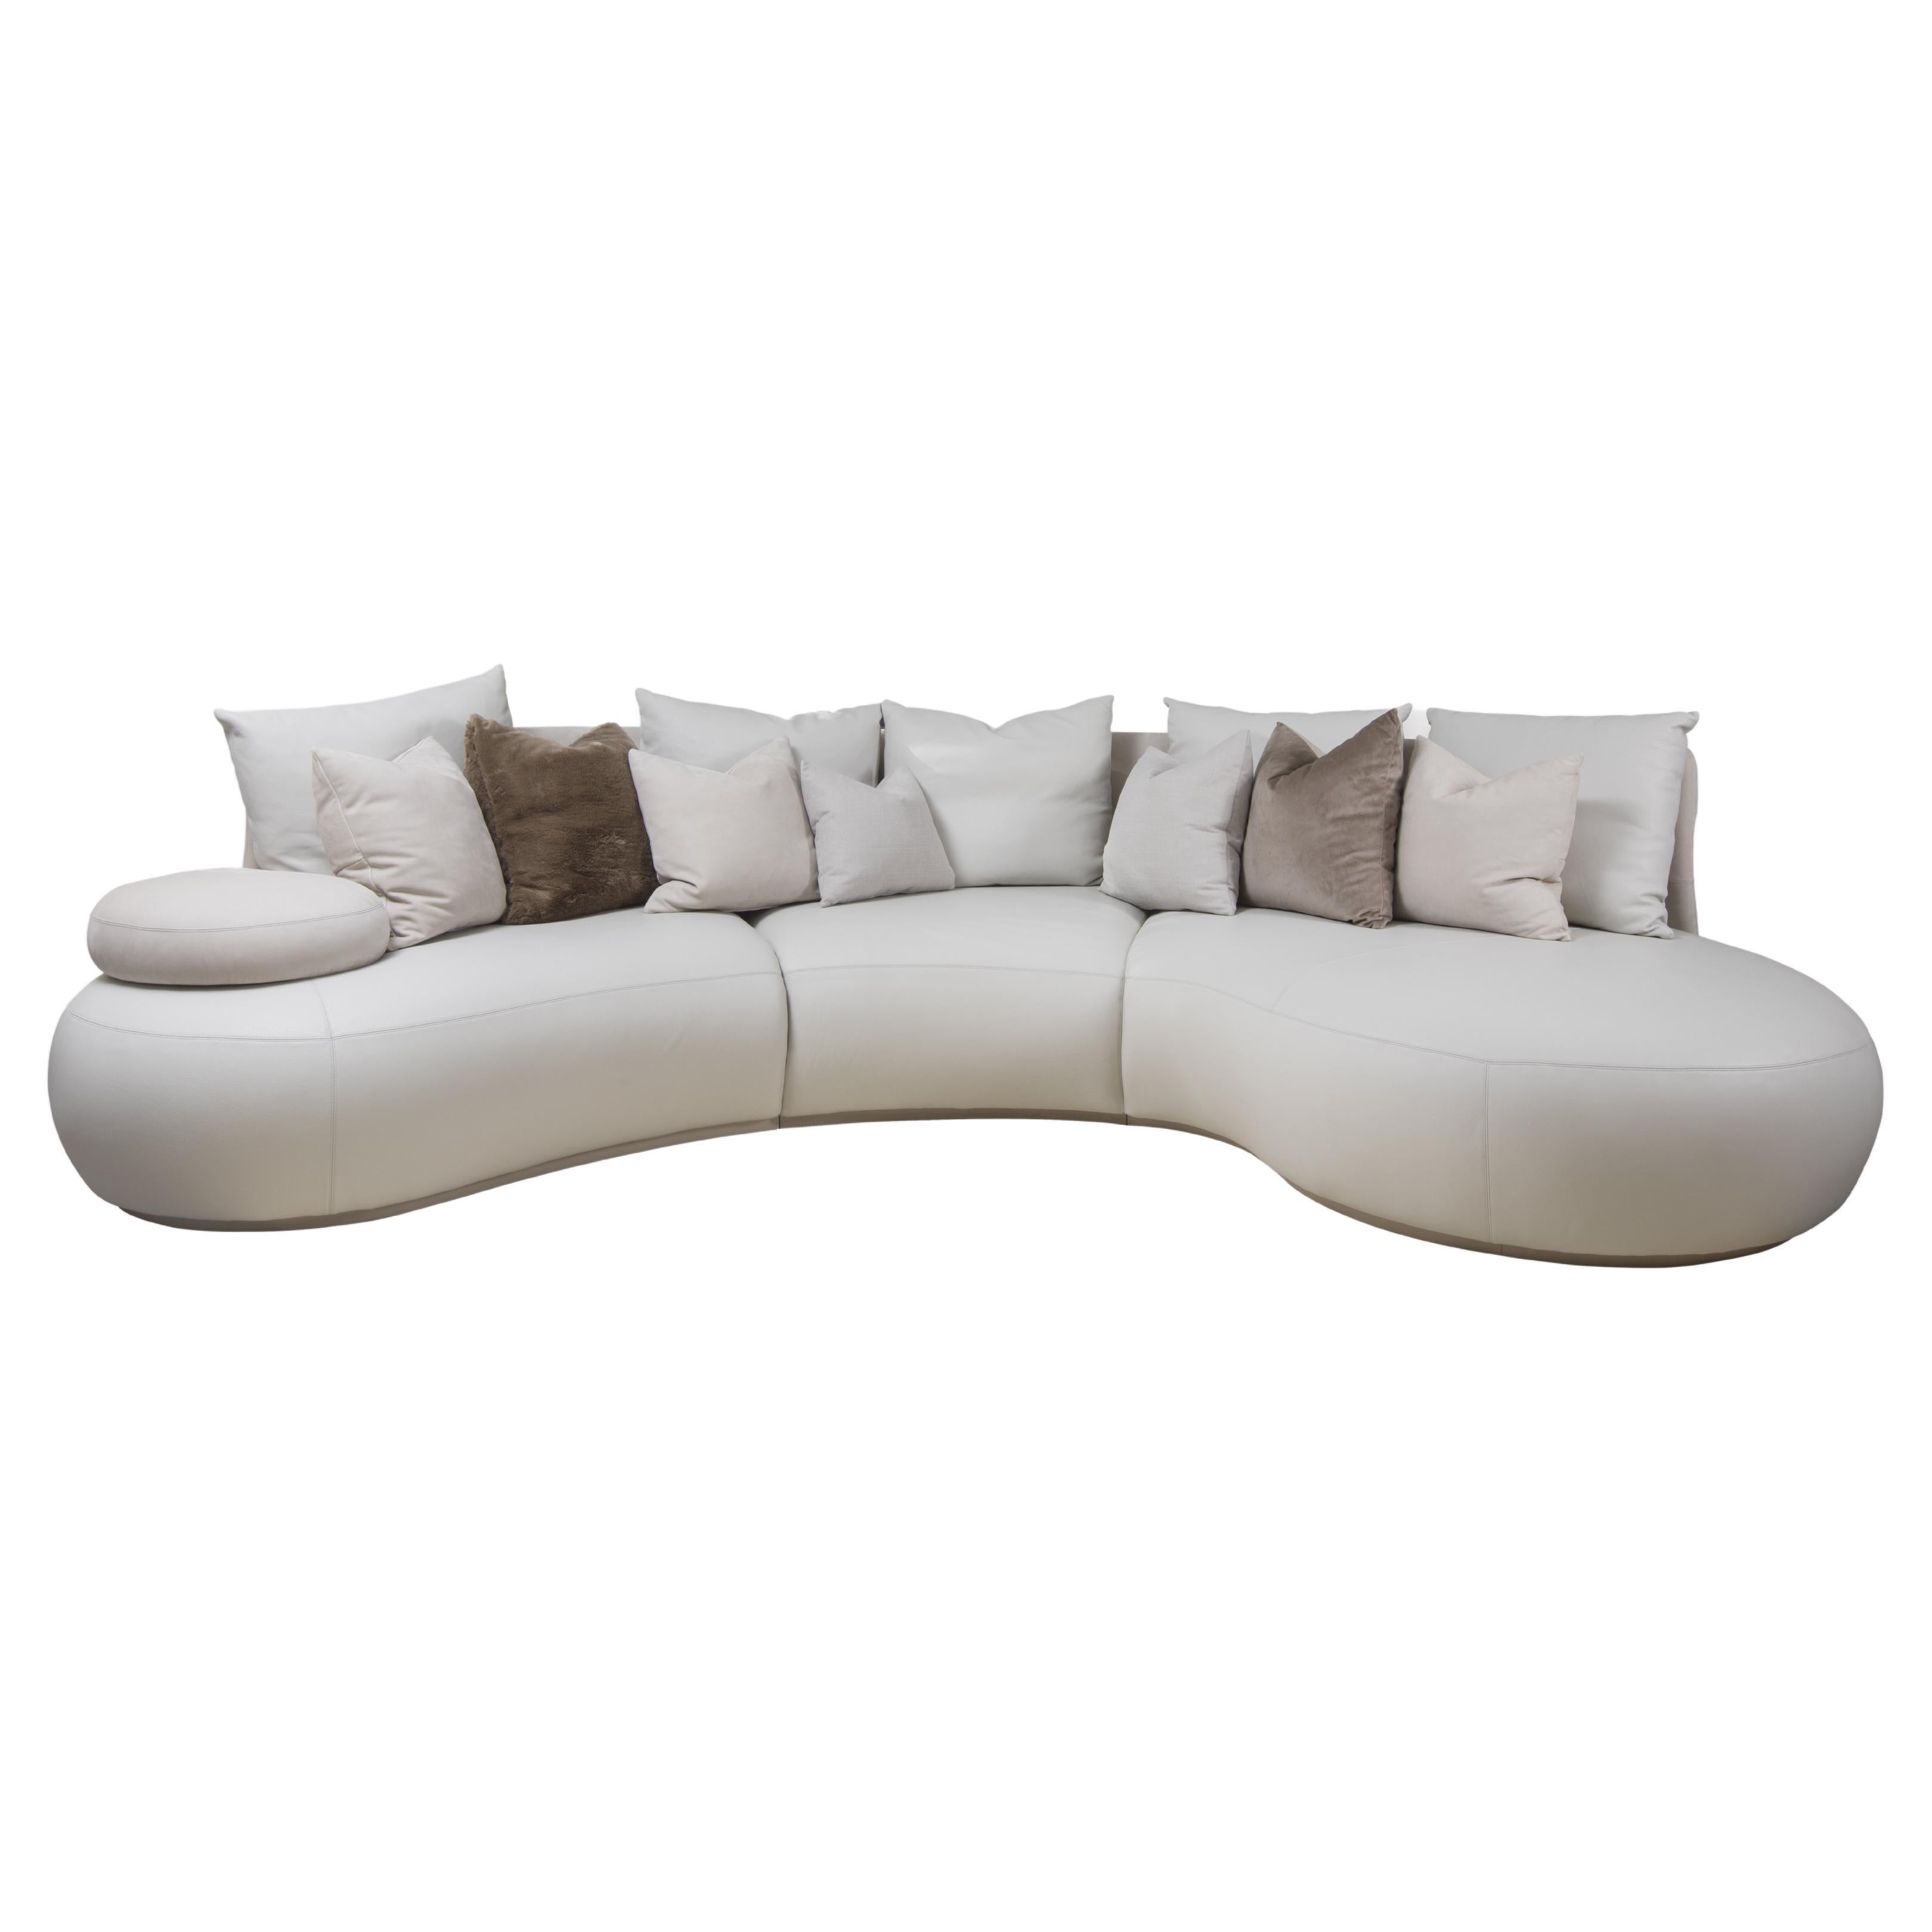 Bahia Royal, Modern Curved Sofa For Sale